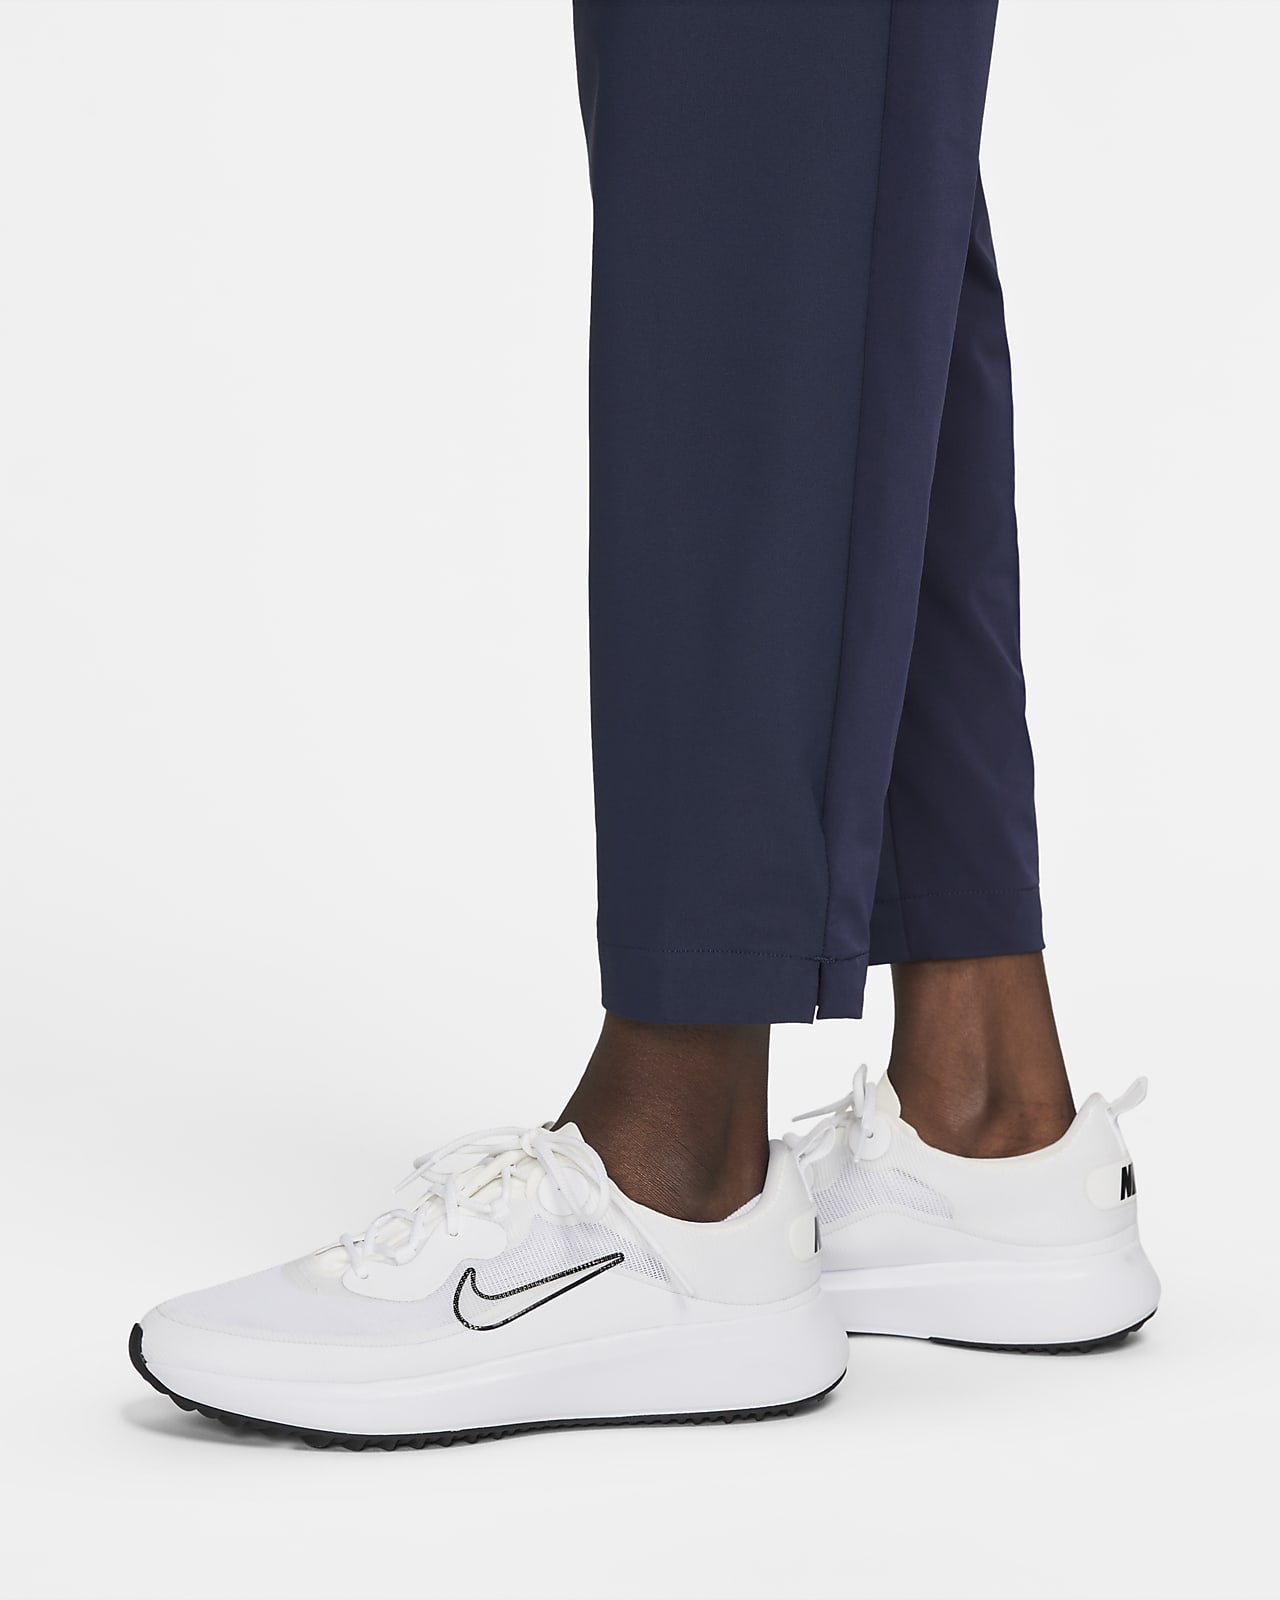 Nike Dri-FIT Women's Golf Pants.